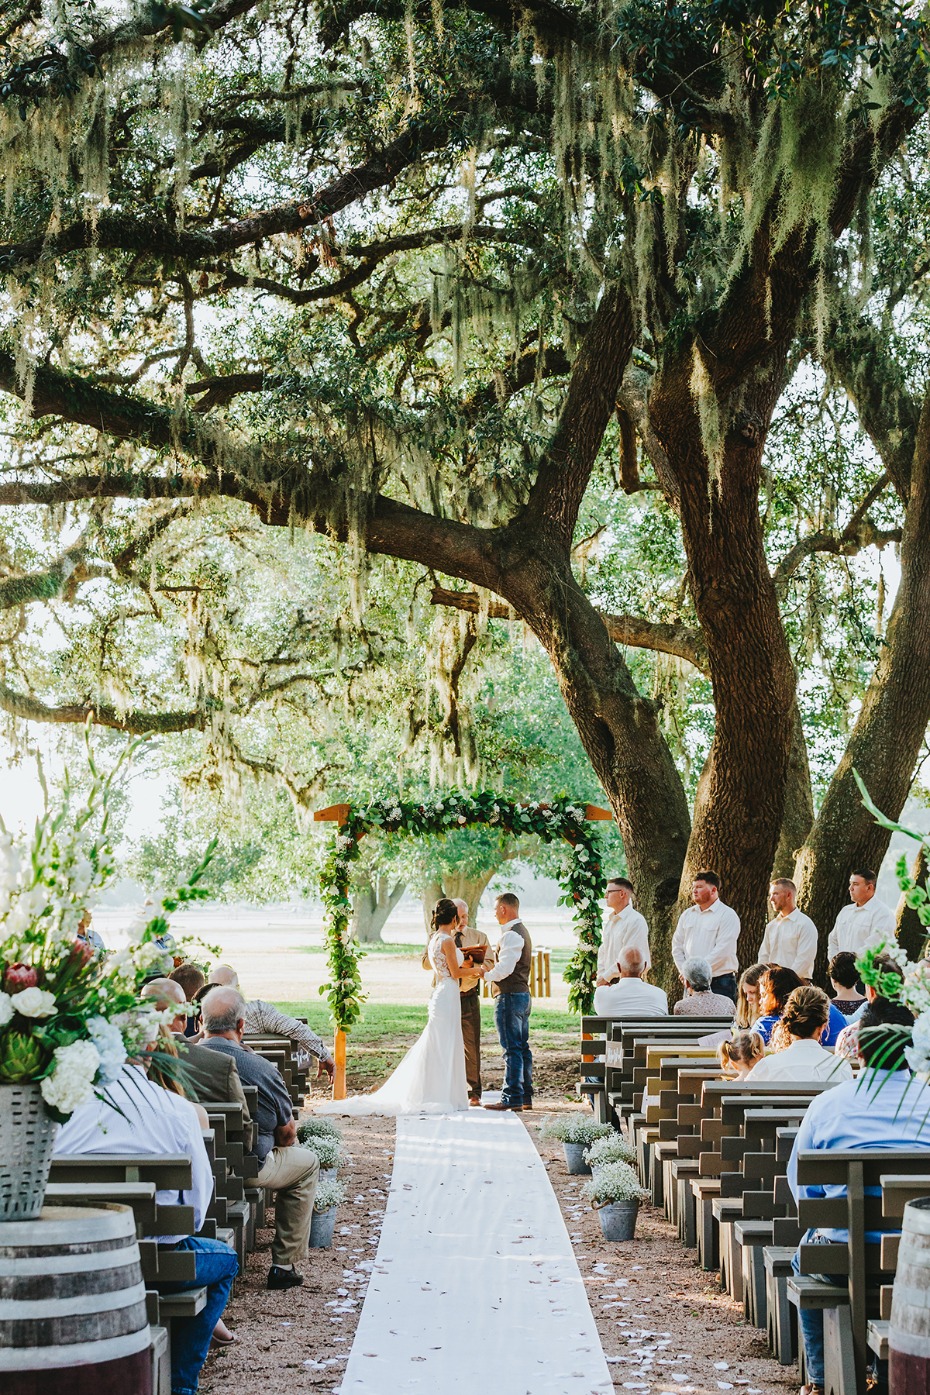 Romantic ceremony under old oak trees